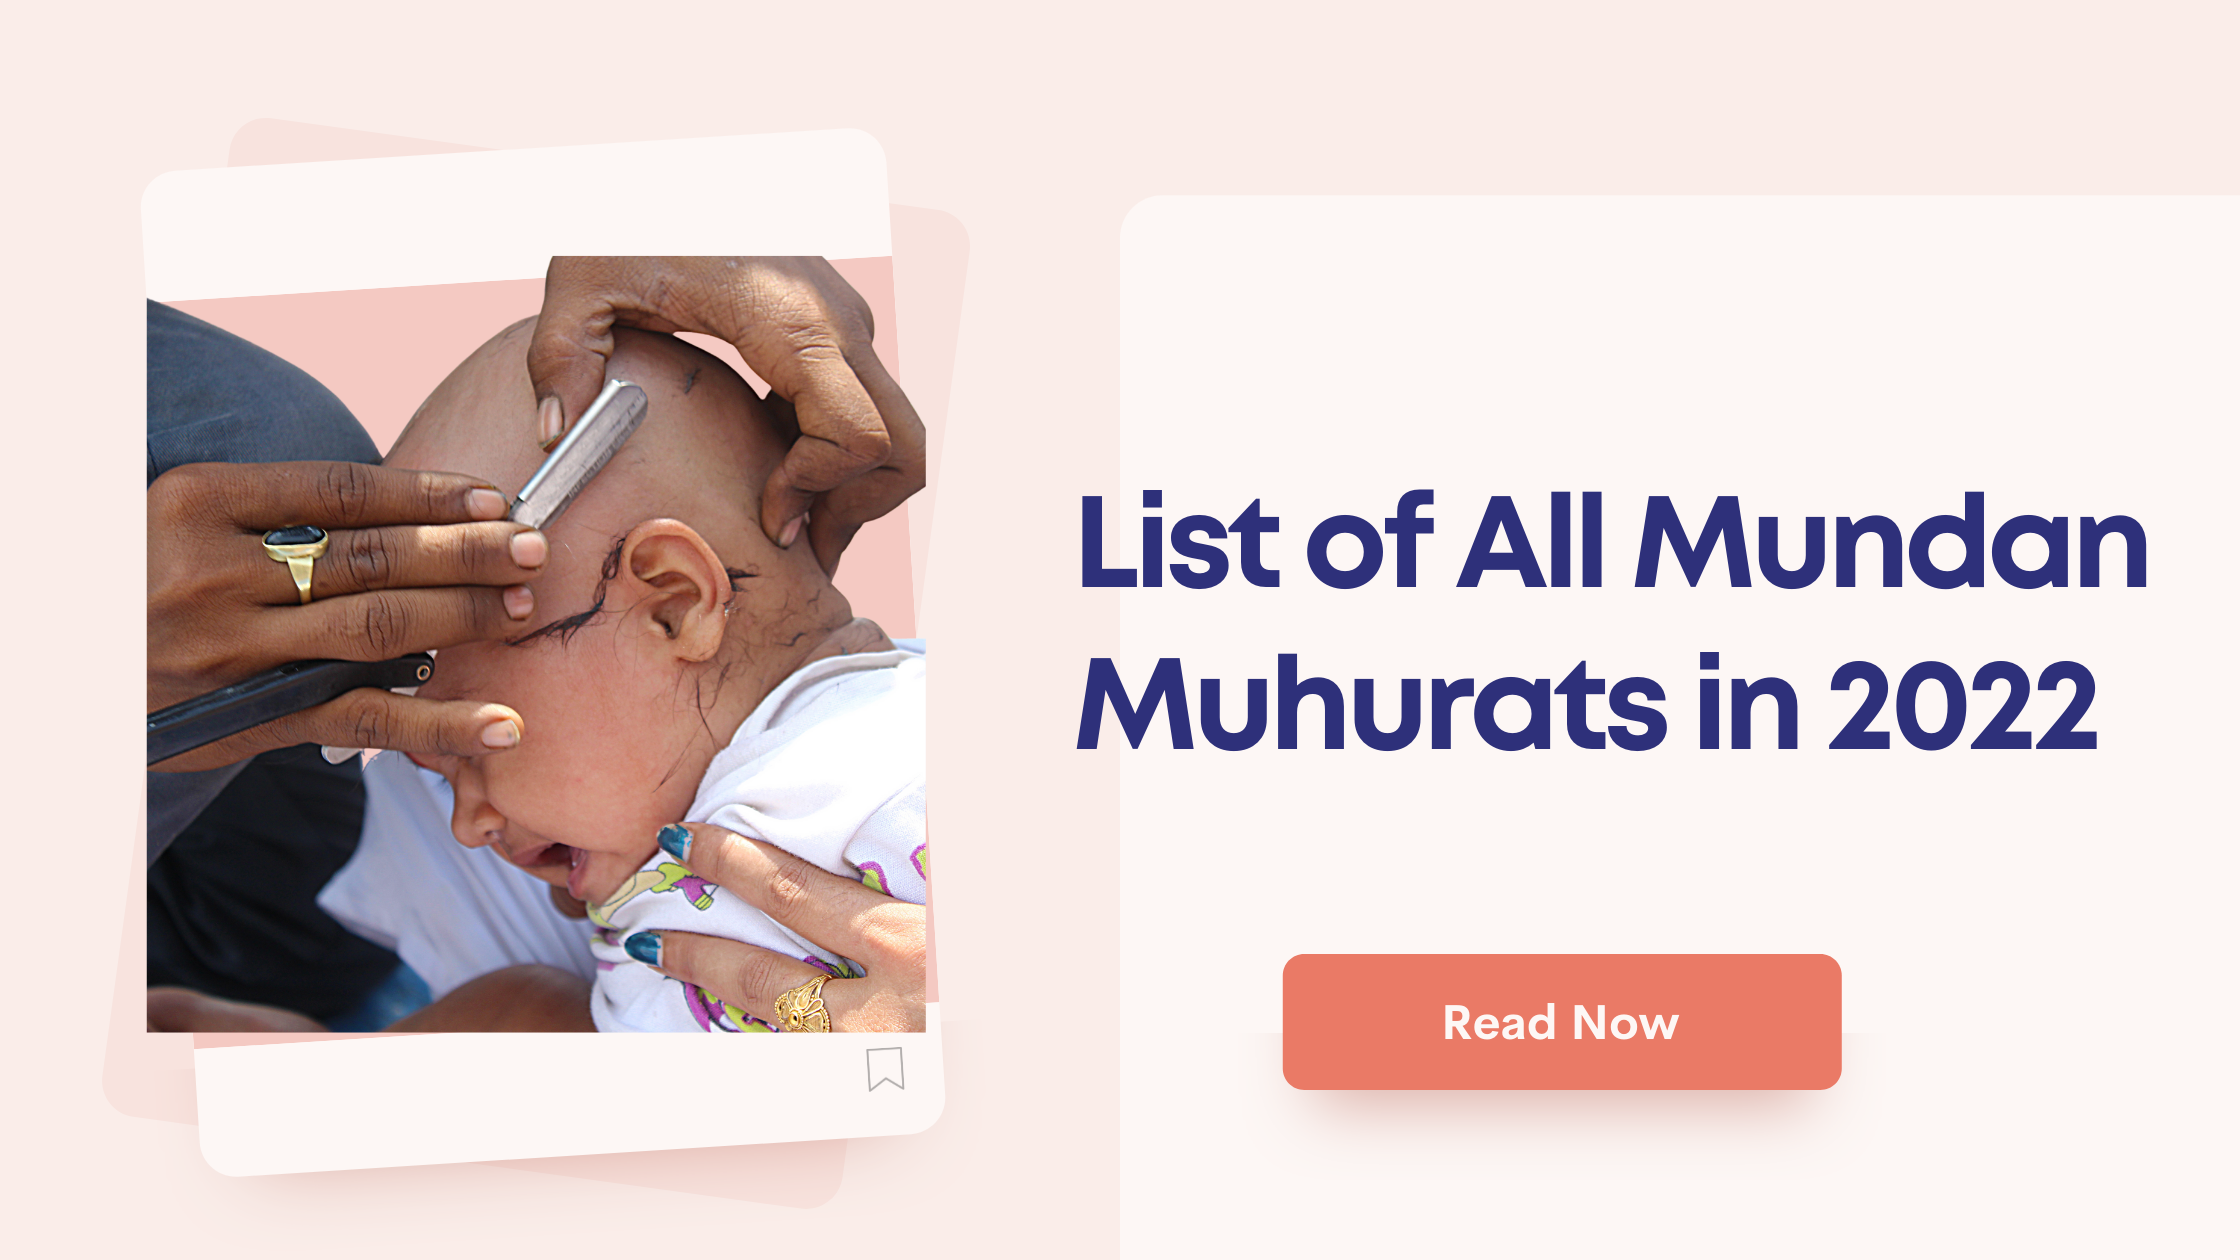 List of All Mundan Muhurats in 2022